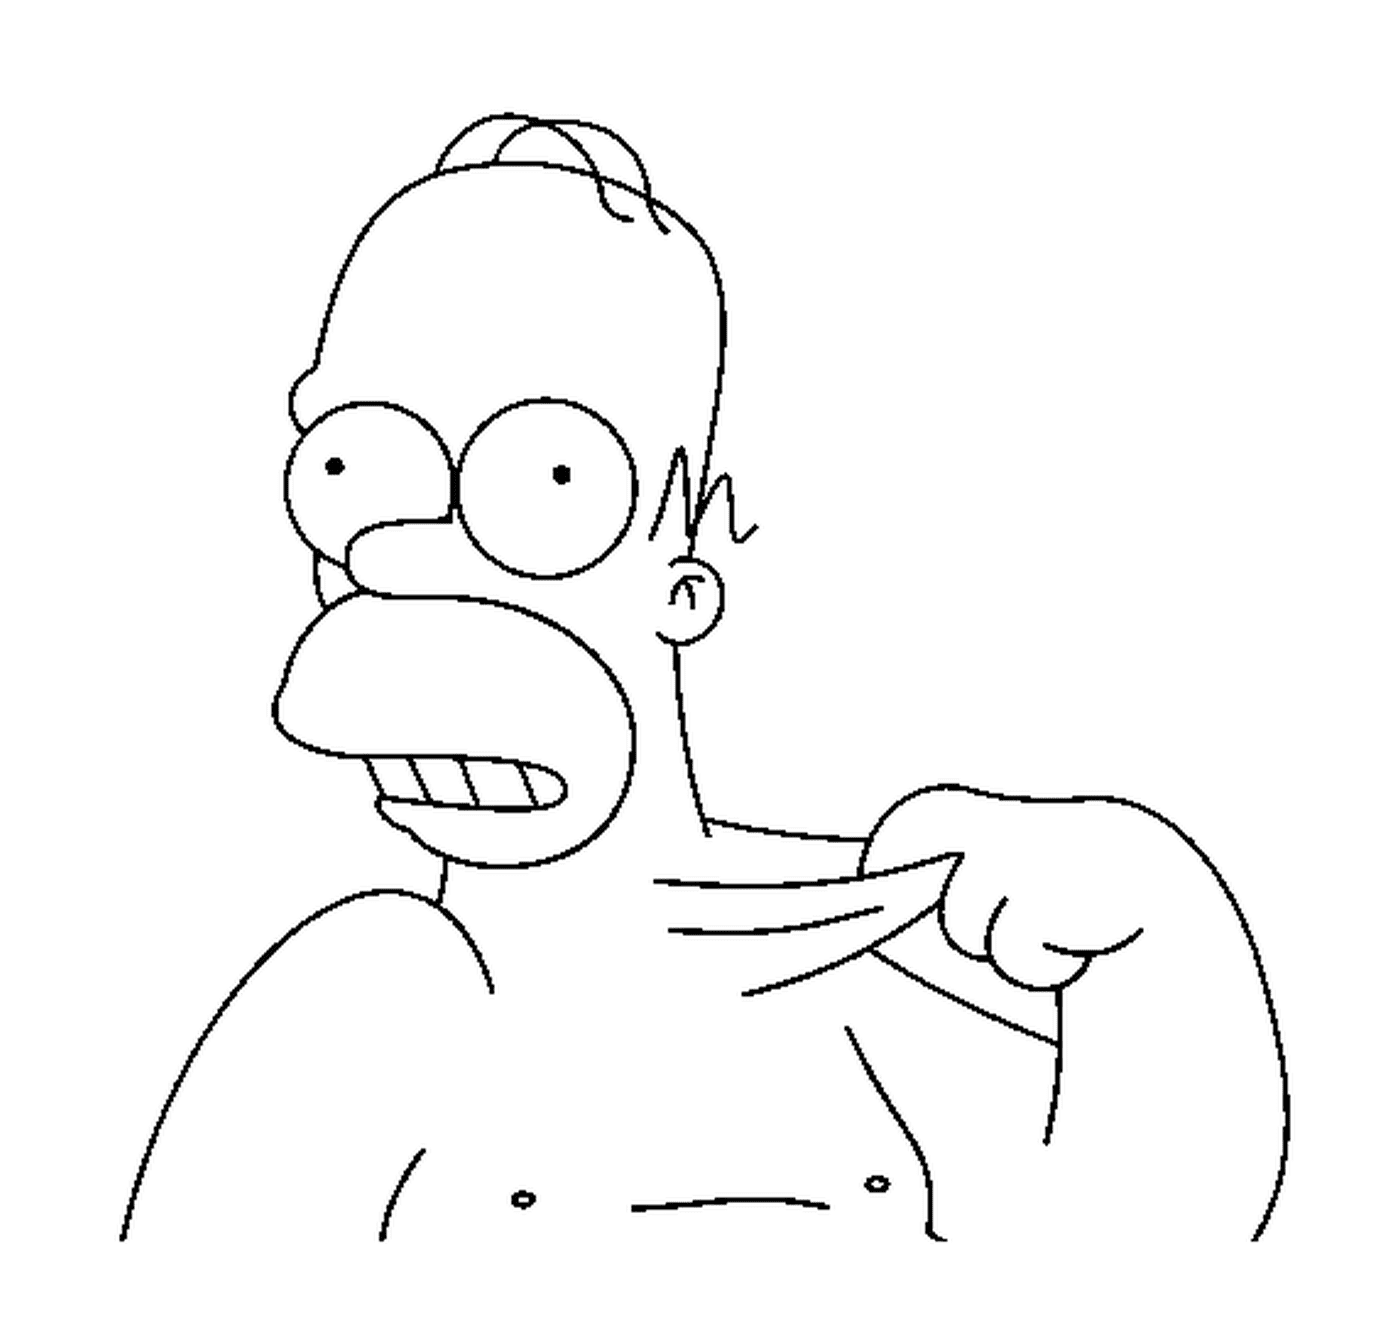  Homer Simpson mit elastischer Haut 